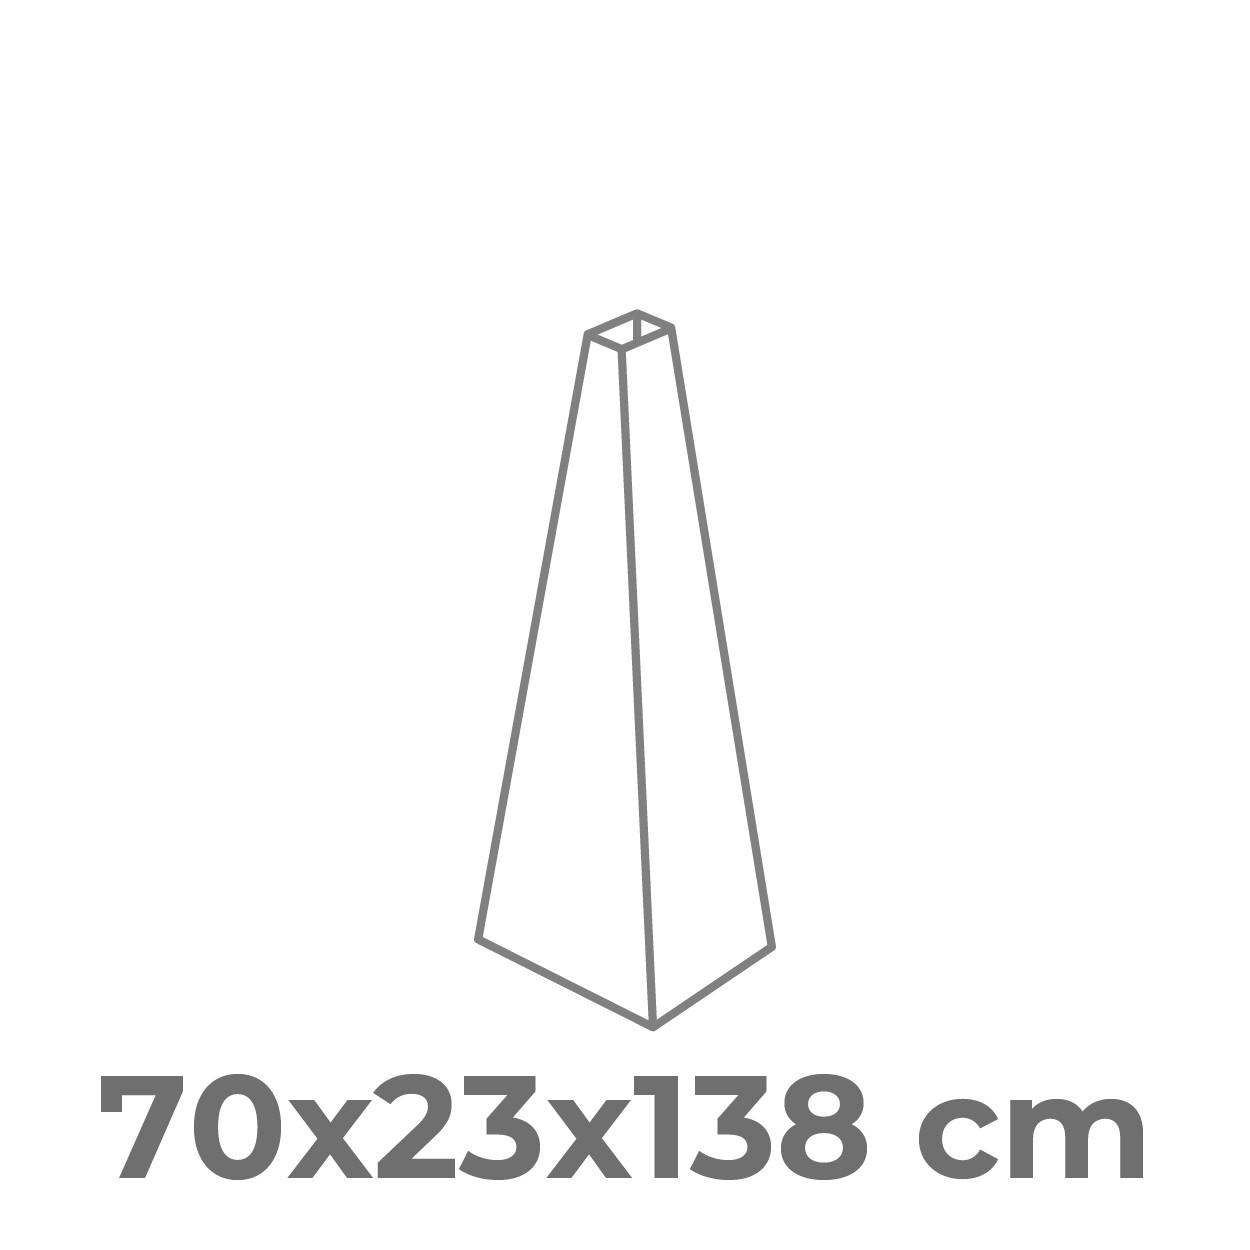 Pirámide pequeña - 70x23x138 cm